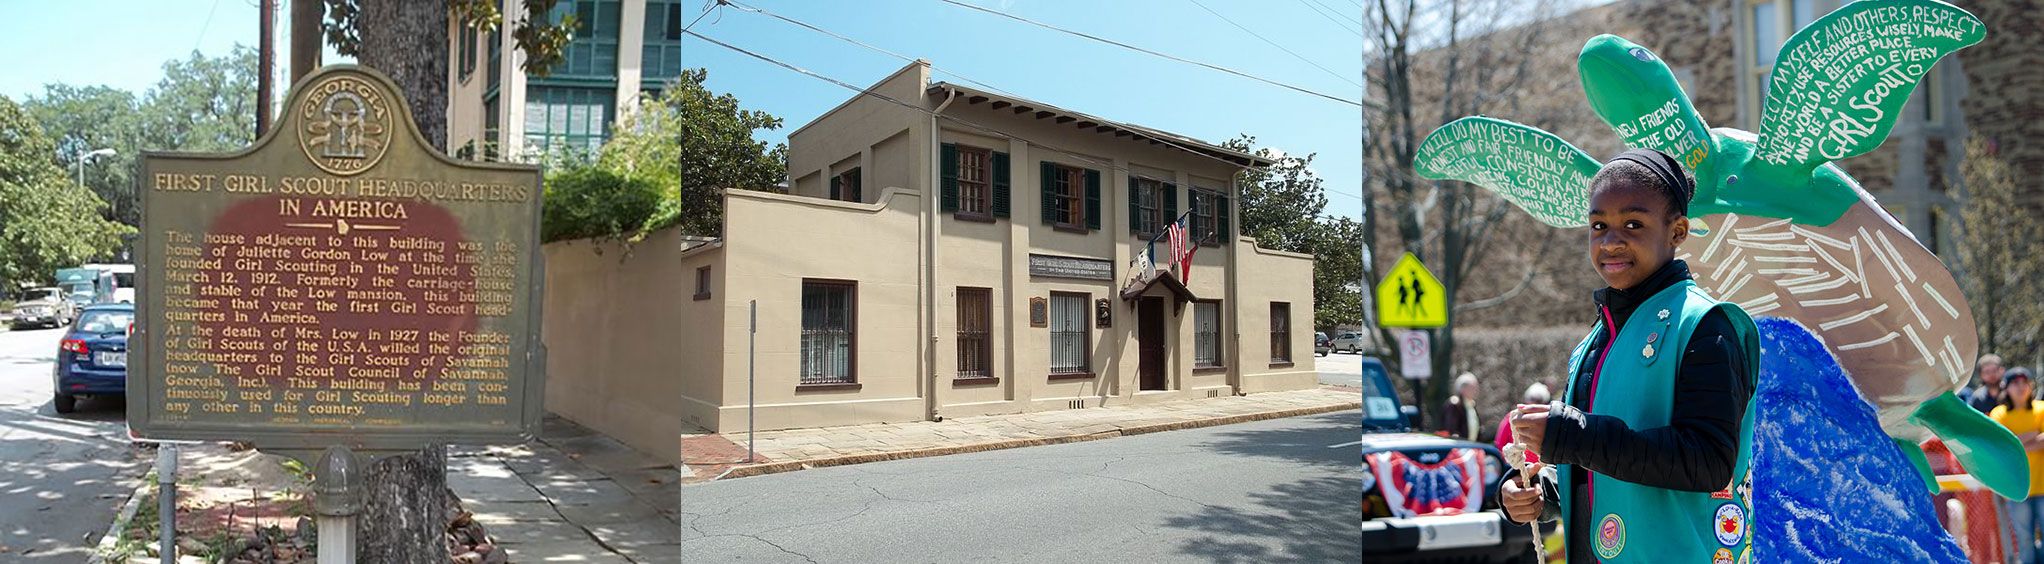 Girl Scout First Headquarters in Savannah, GA